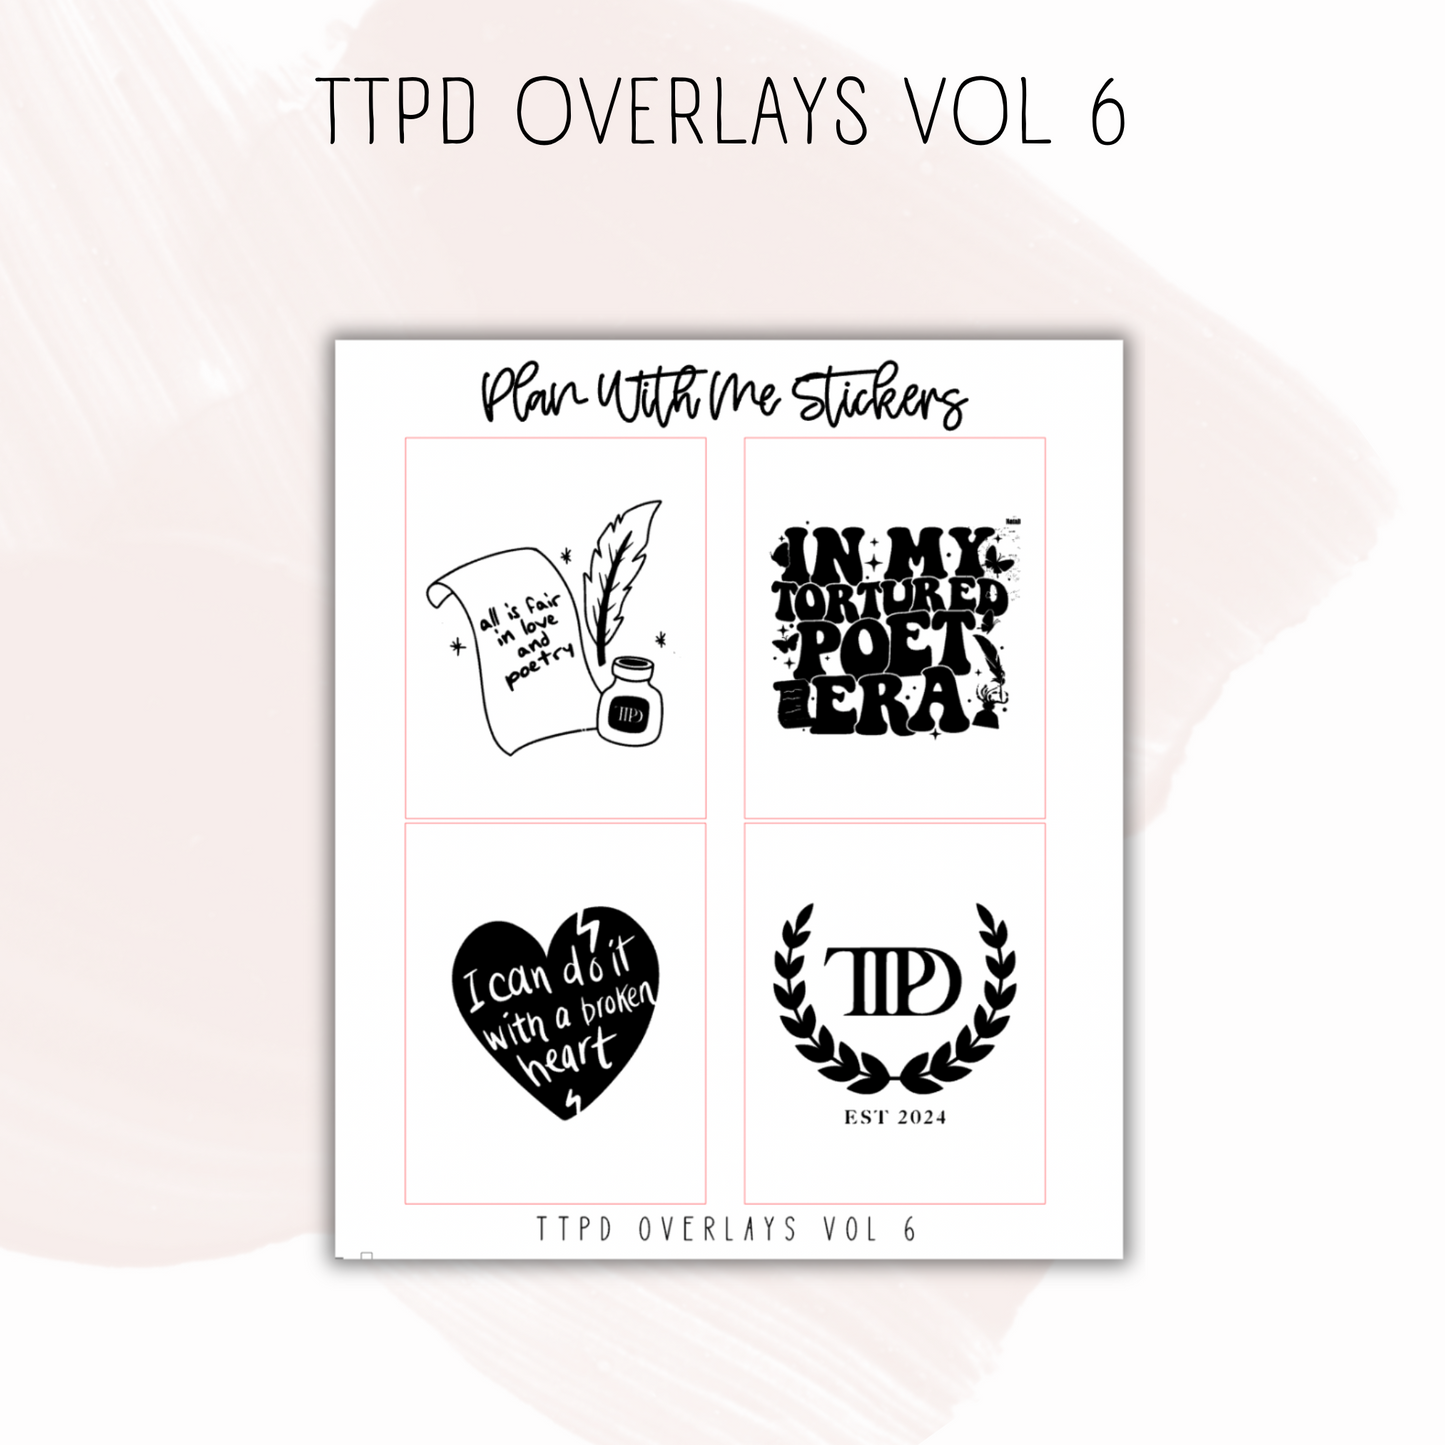 TTPD Overlays Vol 6